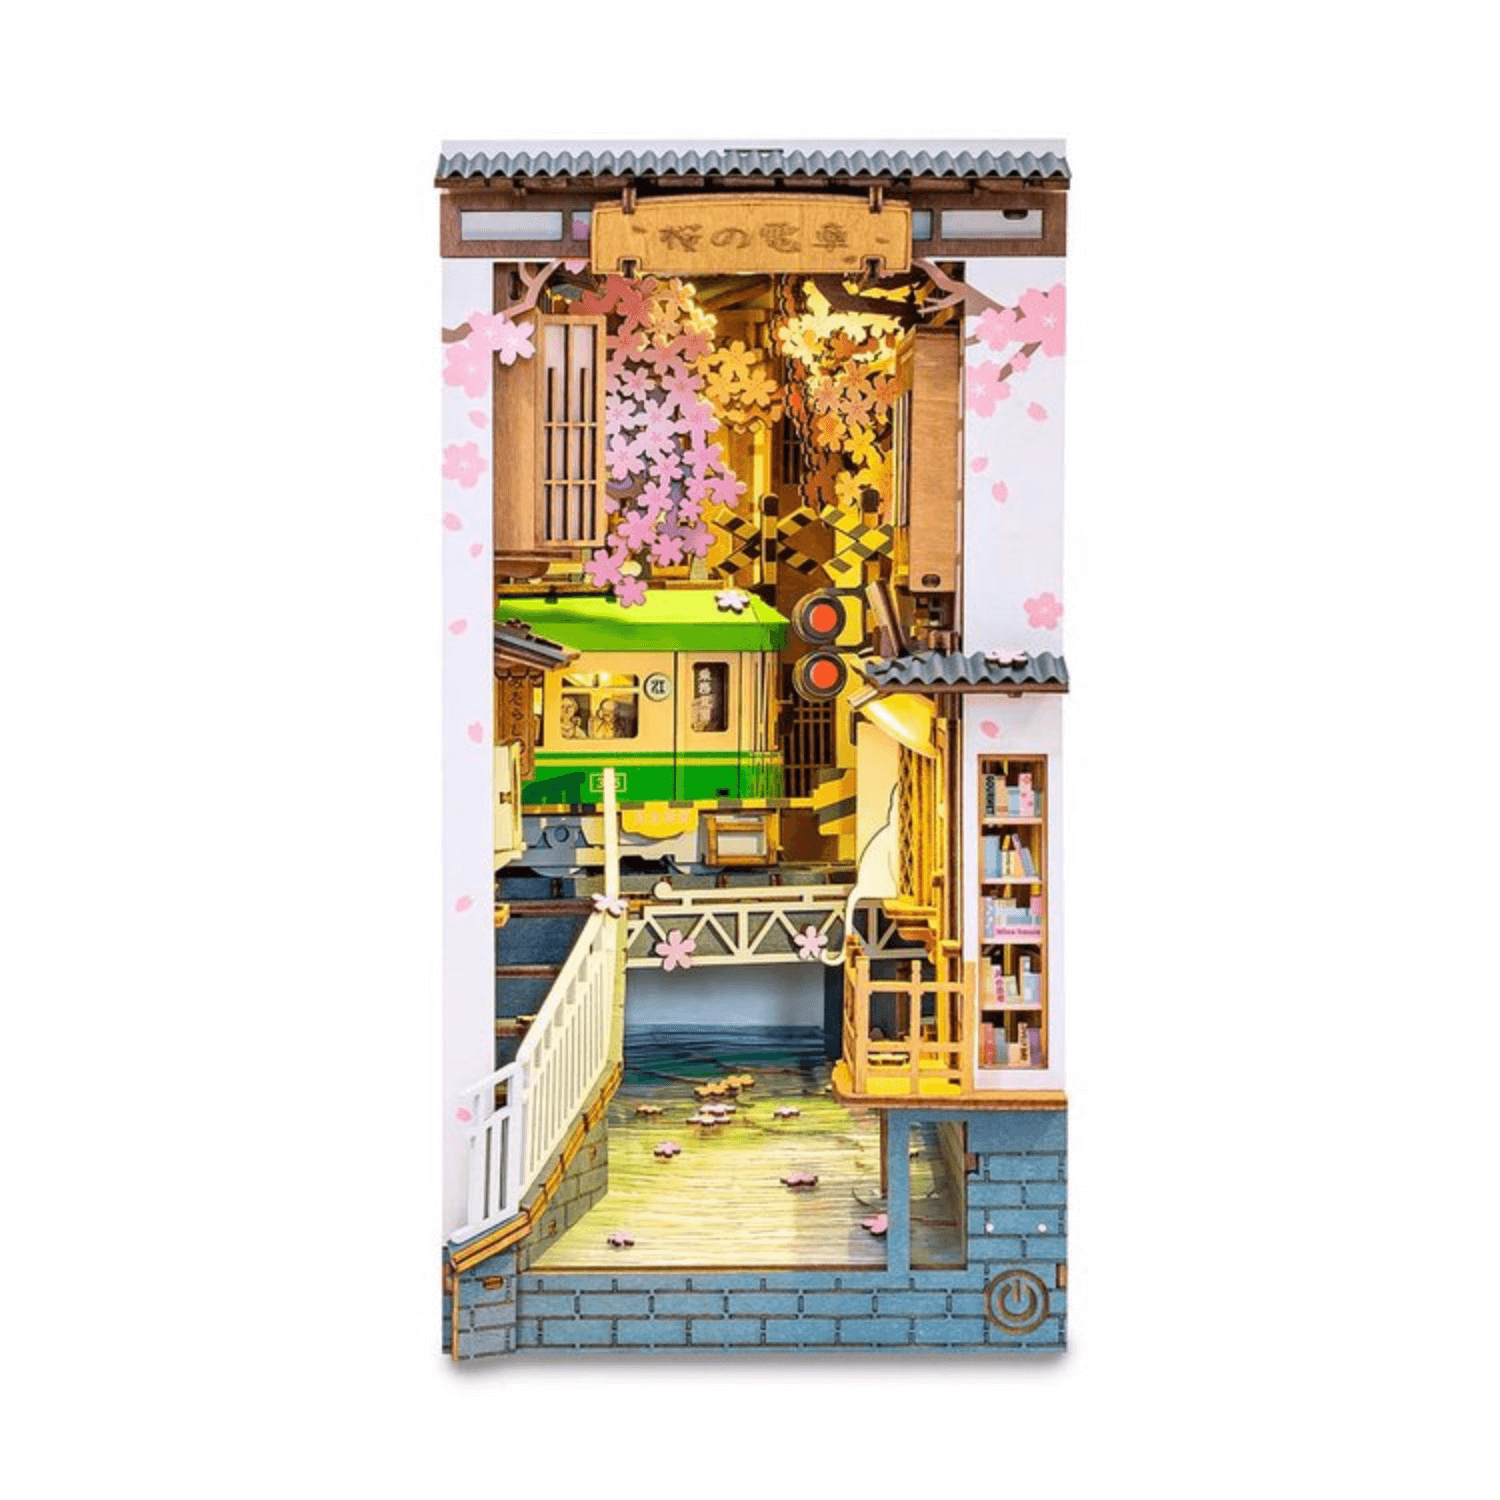 Sakura Densya Book Nook Diorama